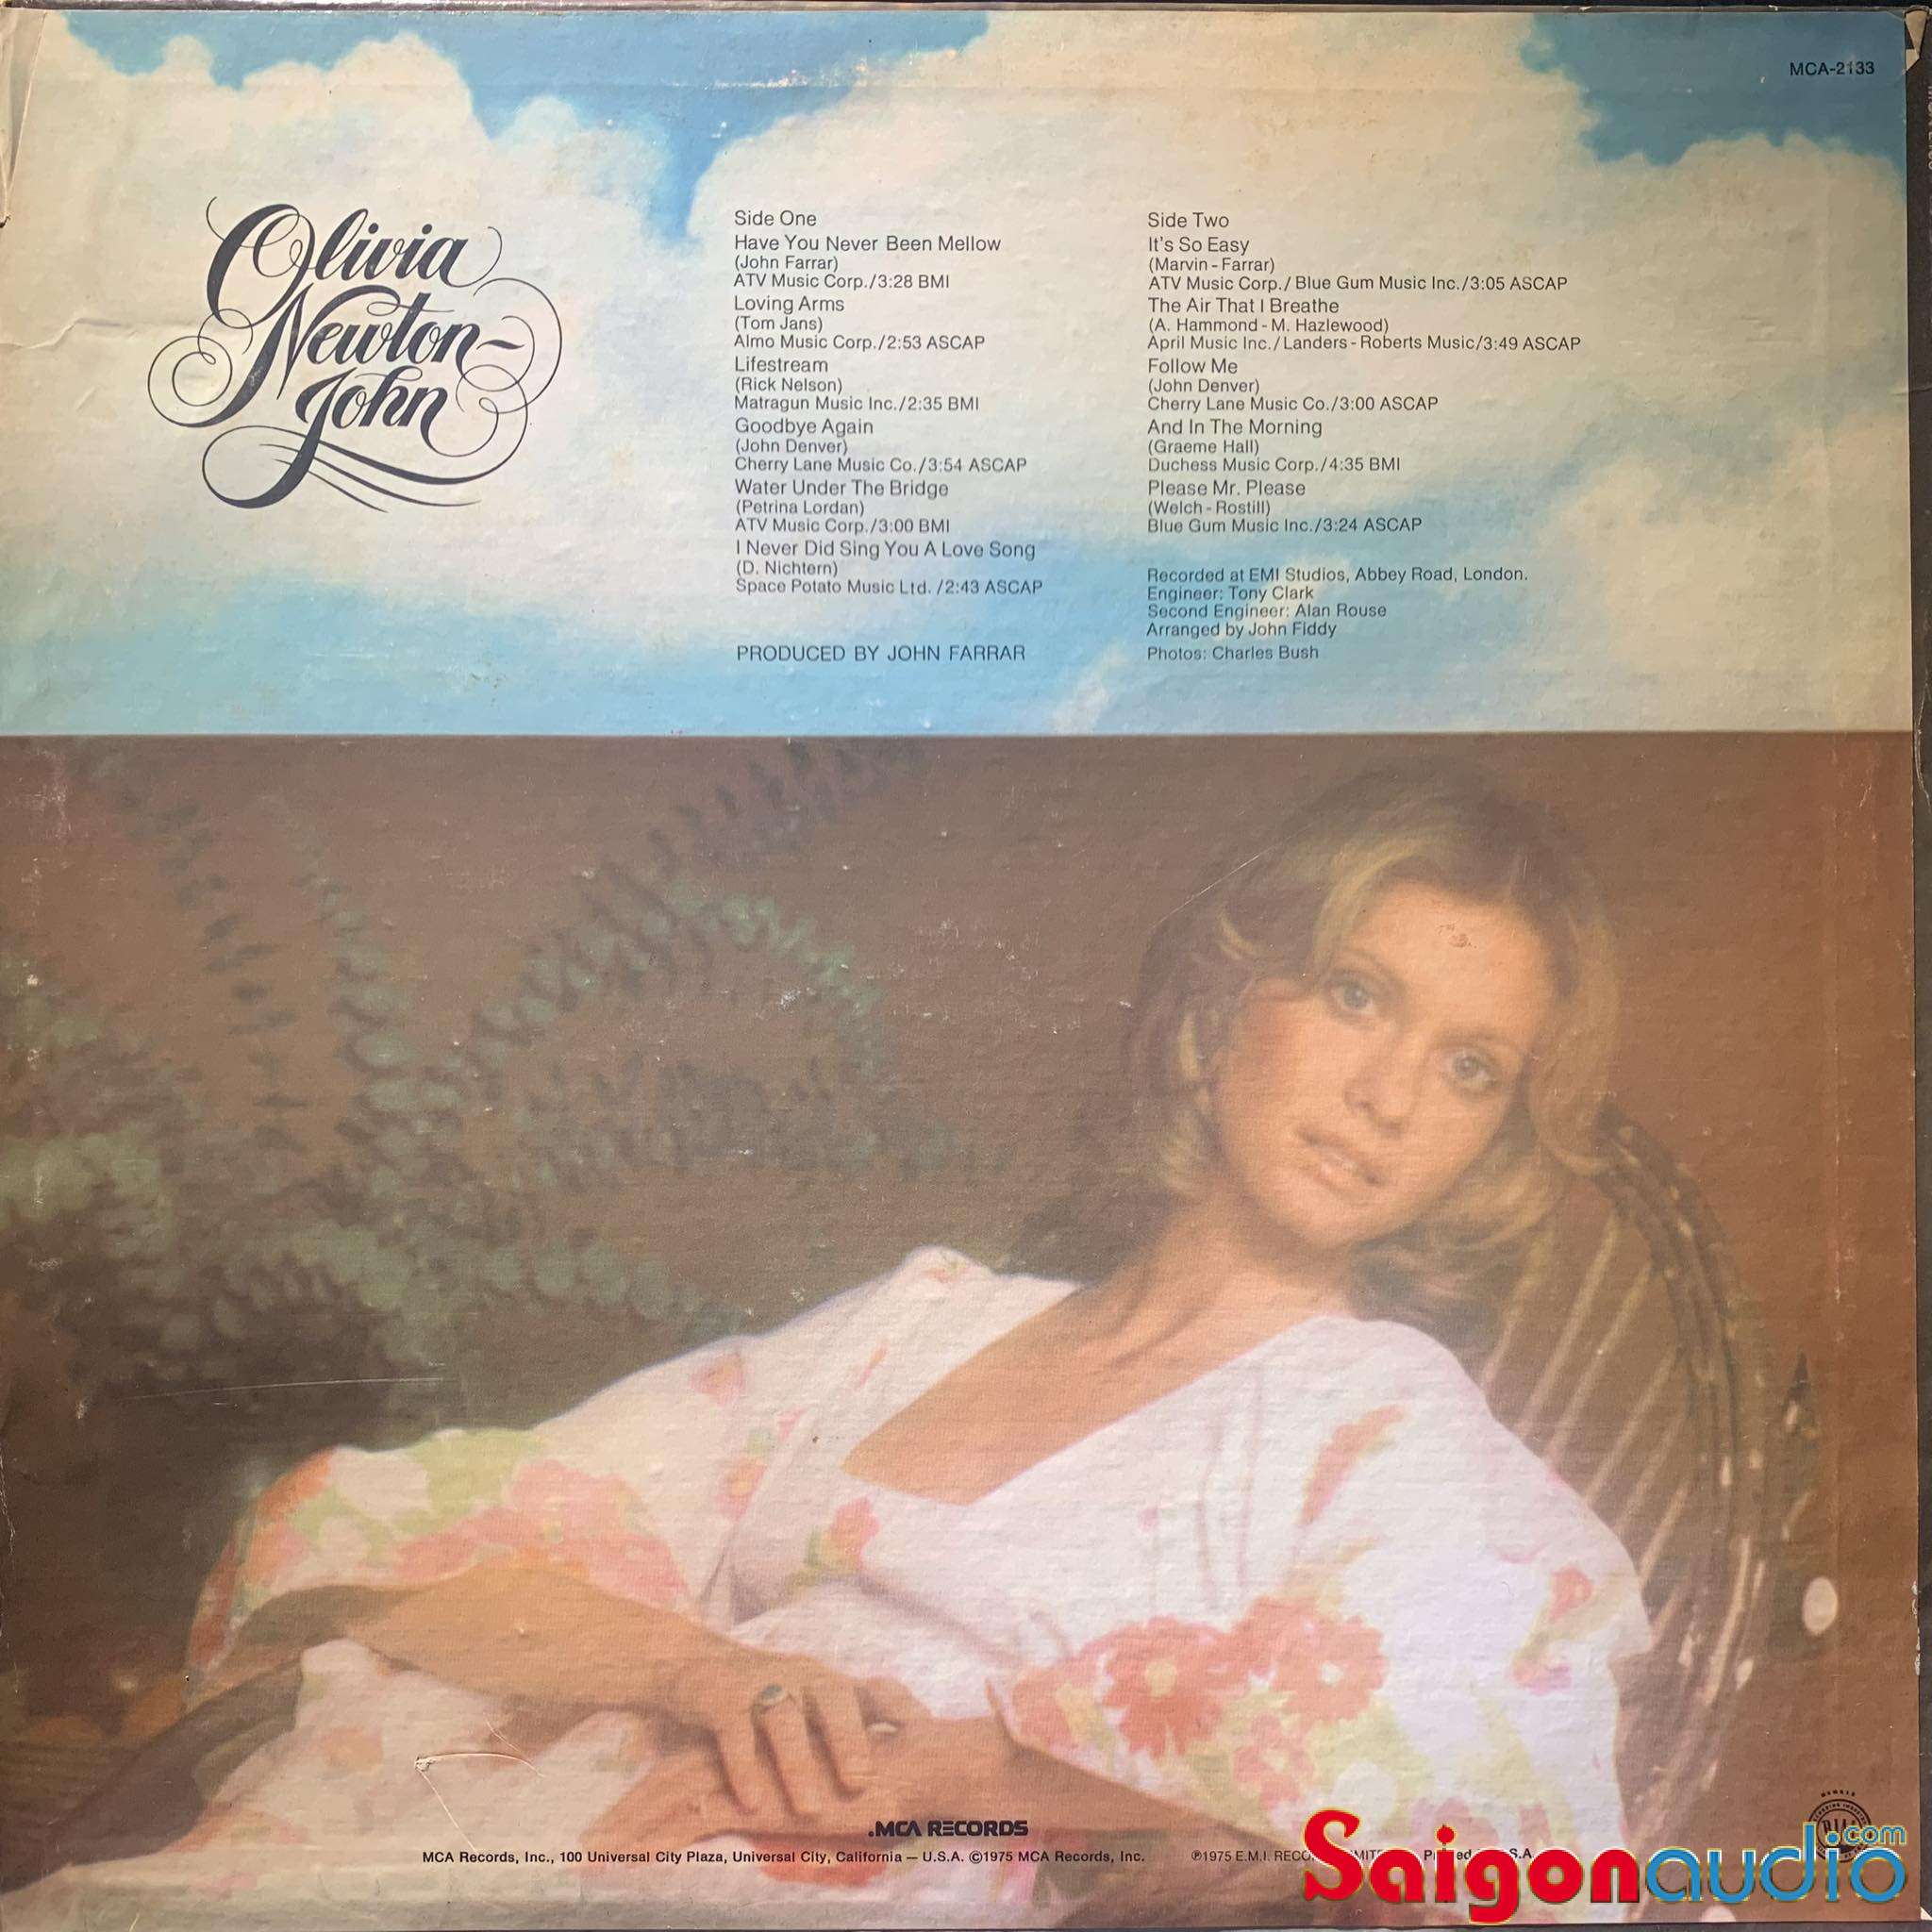 Đĩa than Olivia Newton-John - Have You Never Been Mellow | LP Vinyl Records